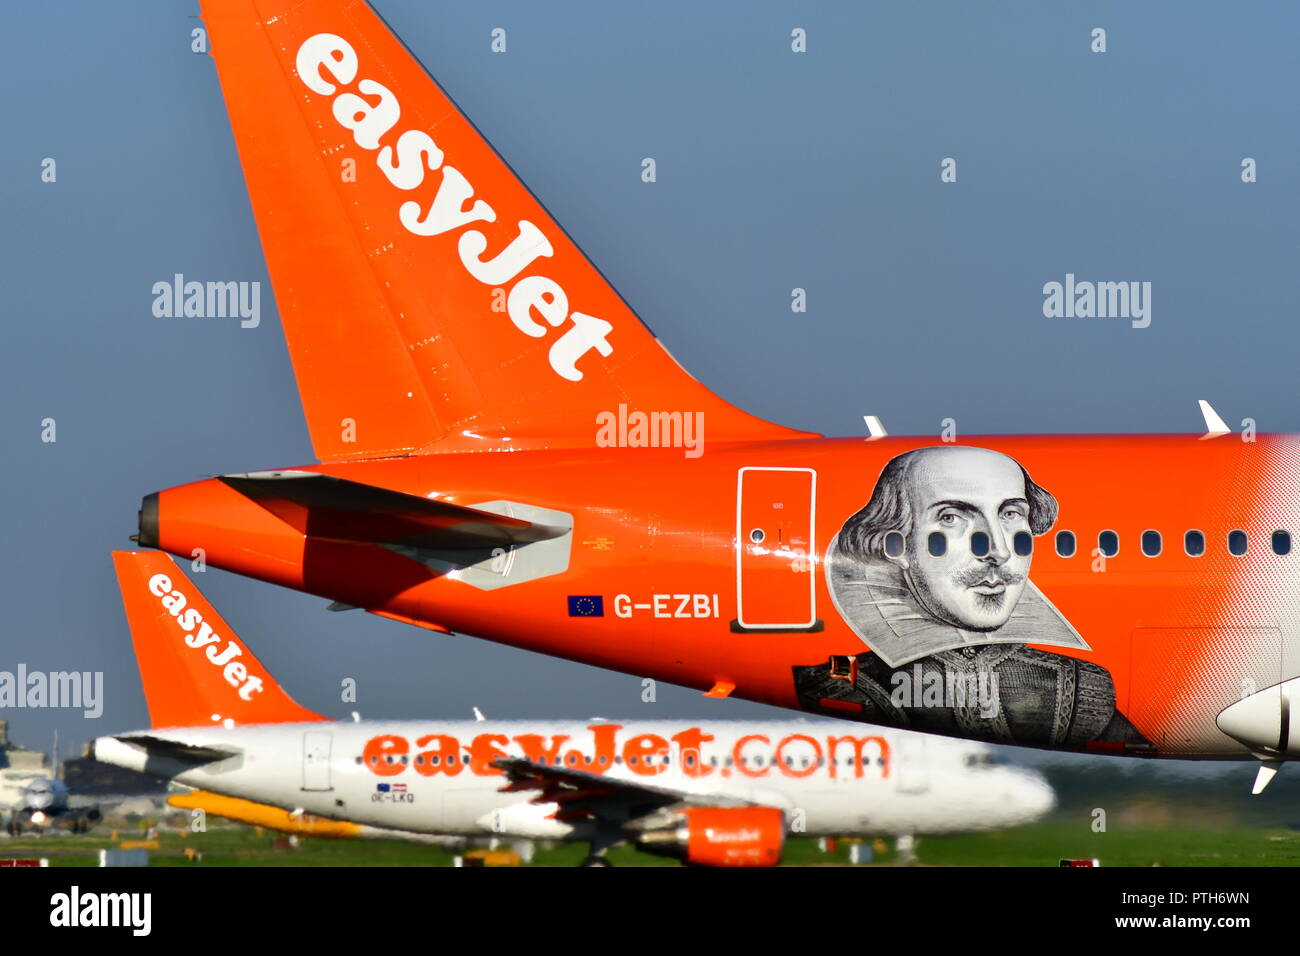 WILLIAM SHAKESPEARE ON EASYJET AIRBUS A319. Stock Photo